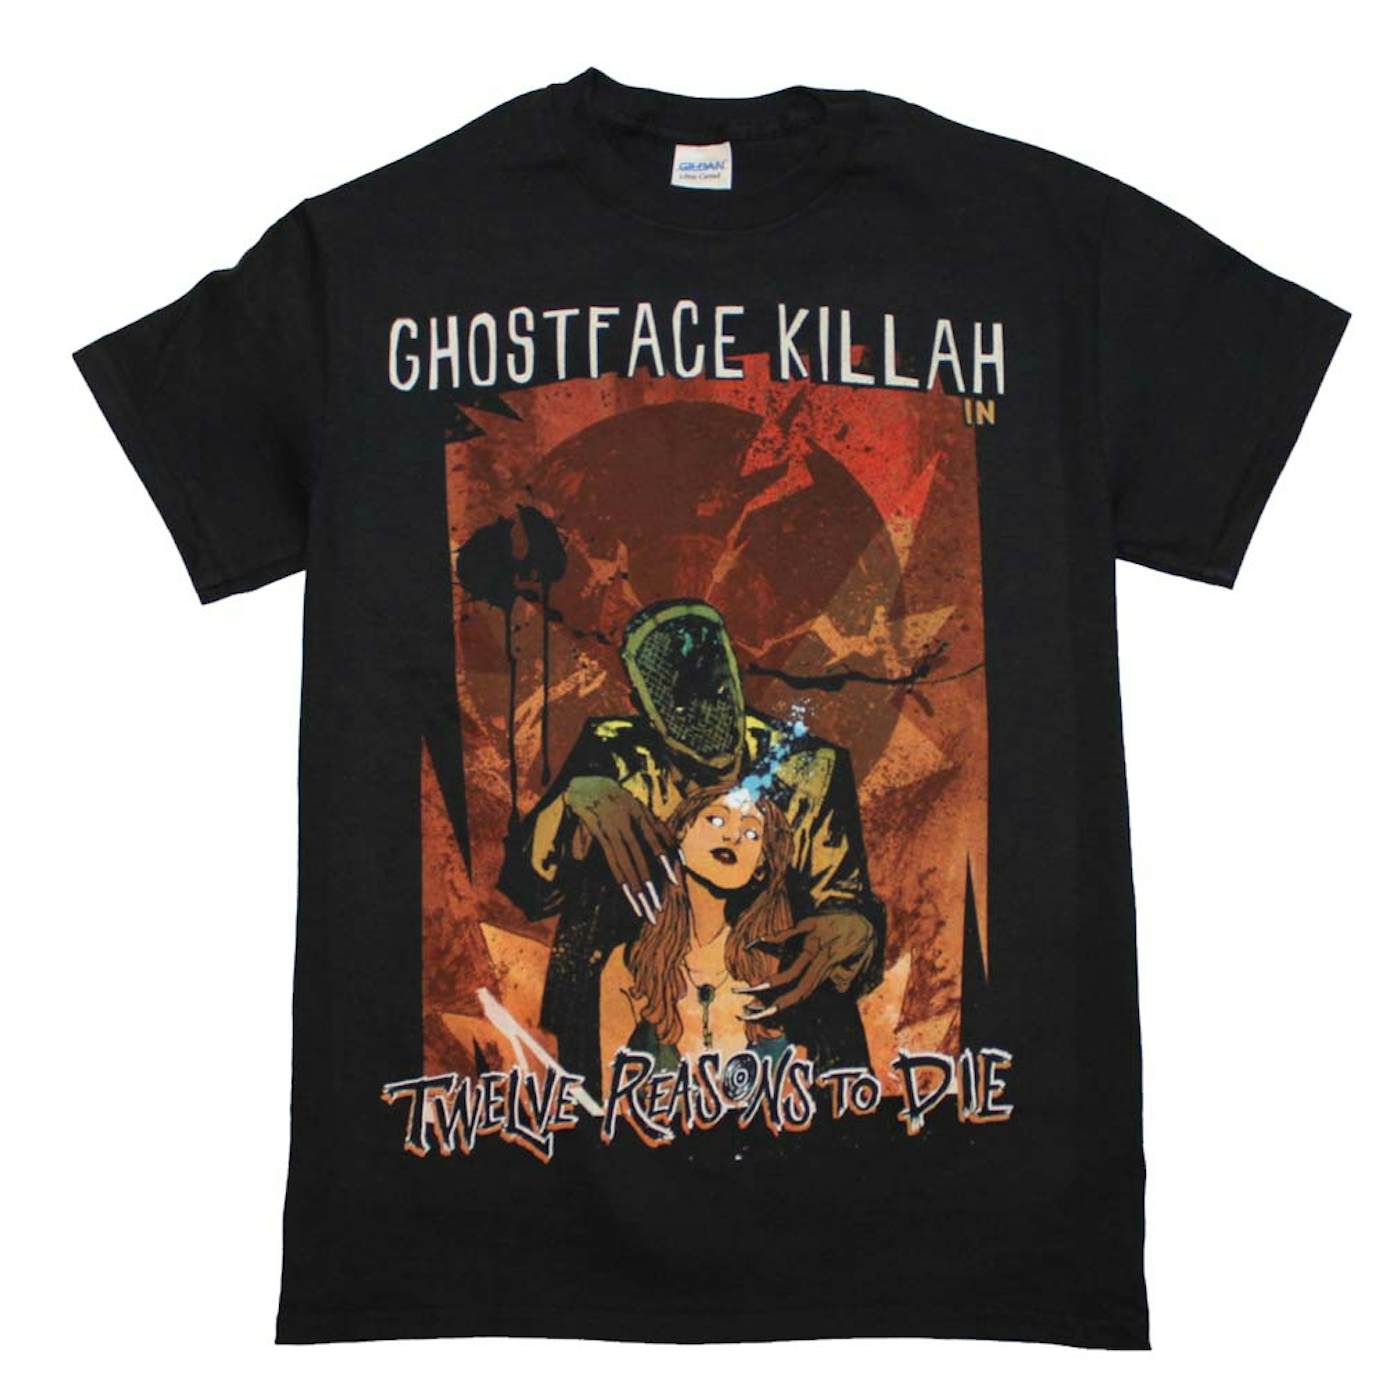 Ghostface Killah T Shirt | Ghost Face Killah 12 Reasons to Die T-Shirt